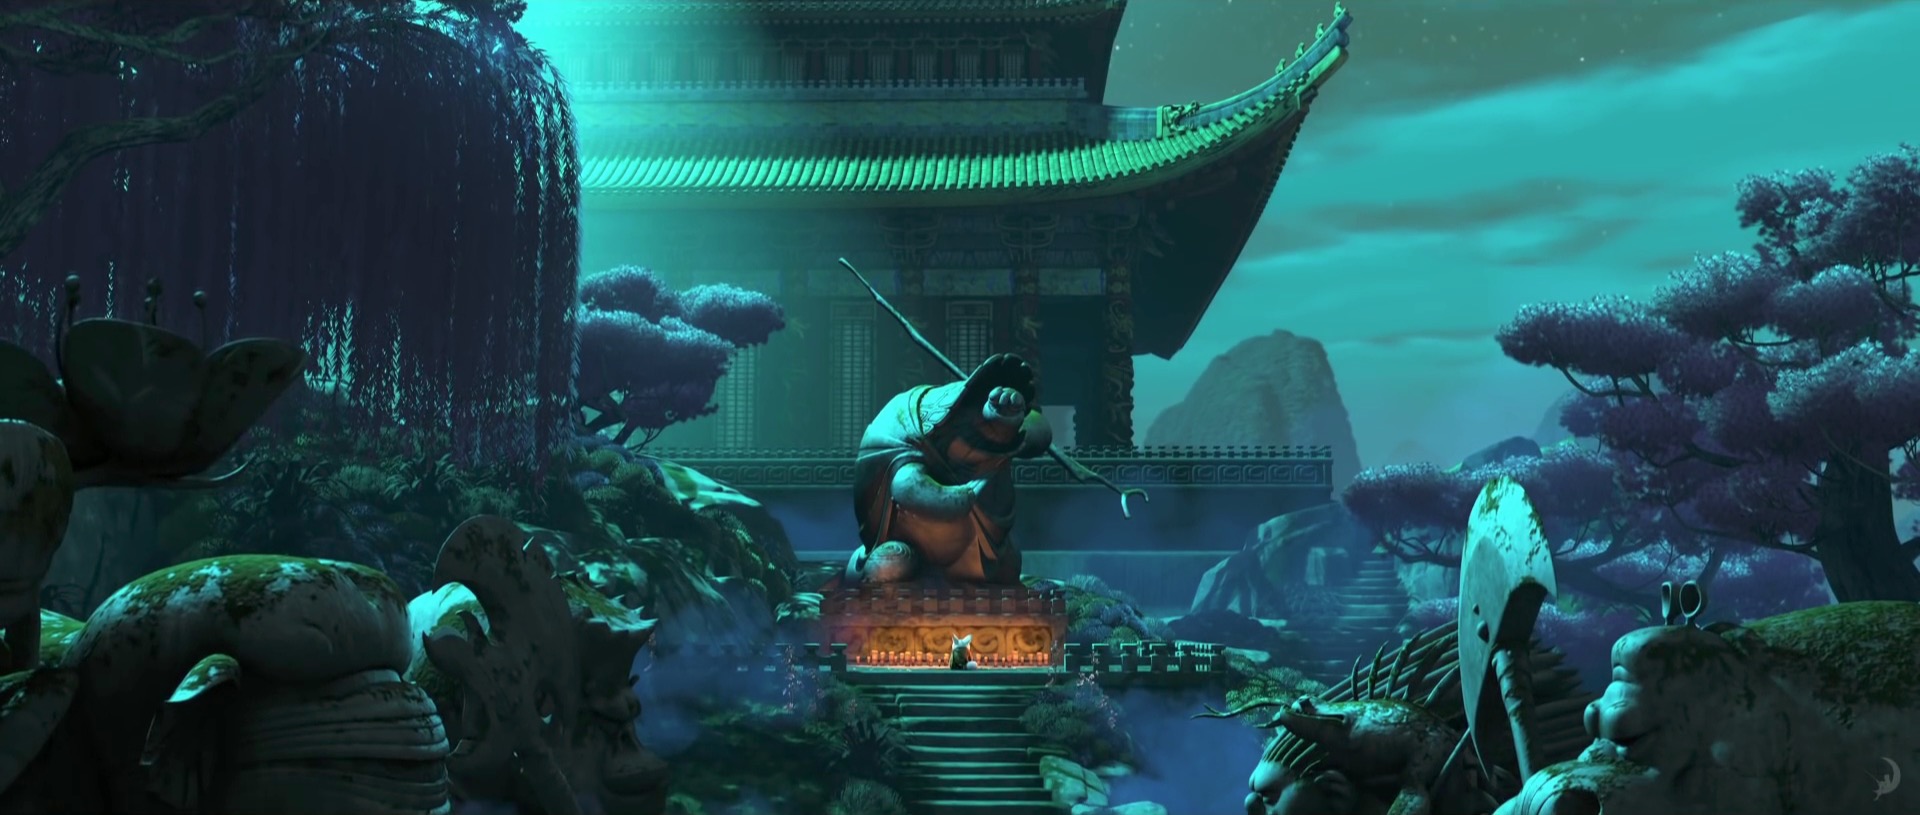 Jade Palace from Kung Fu Panda 3 Desktop Wallpaper